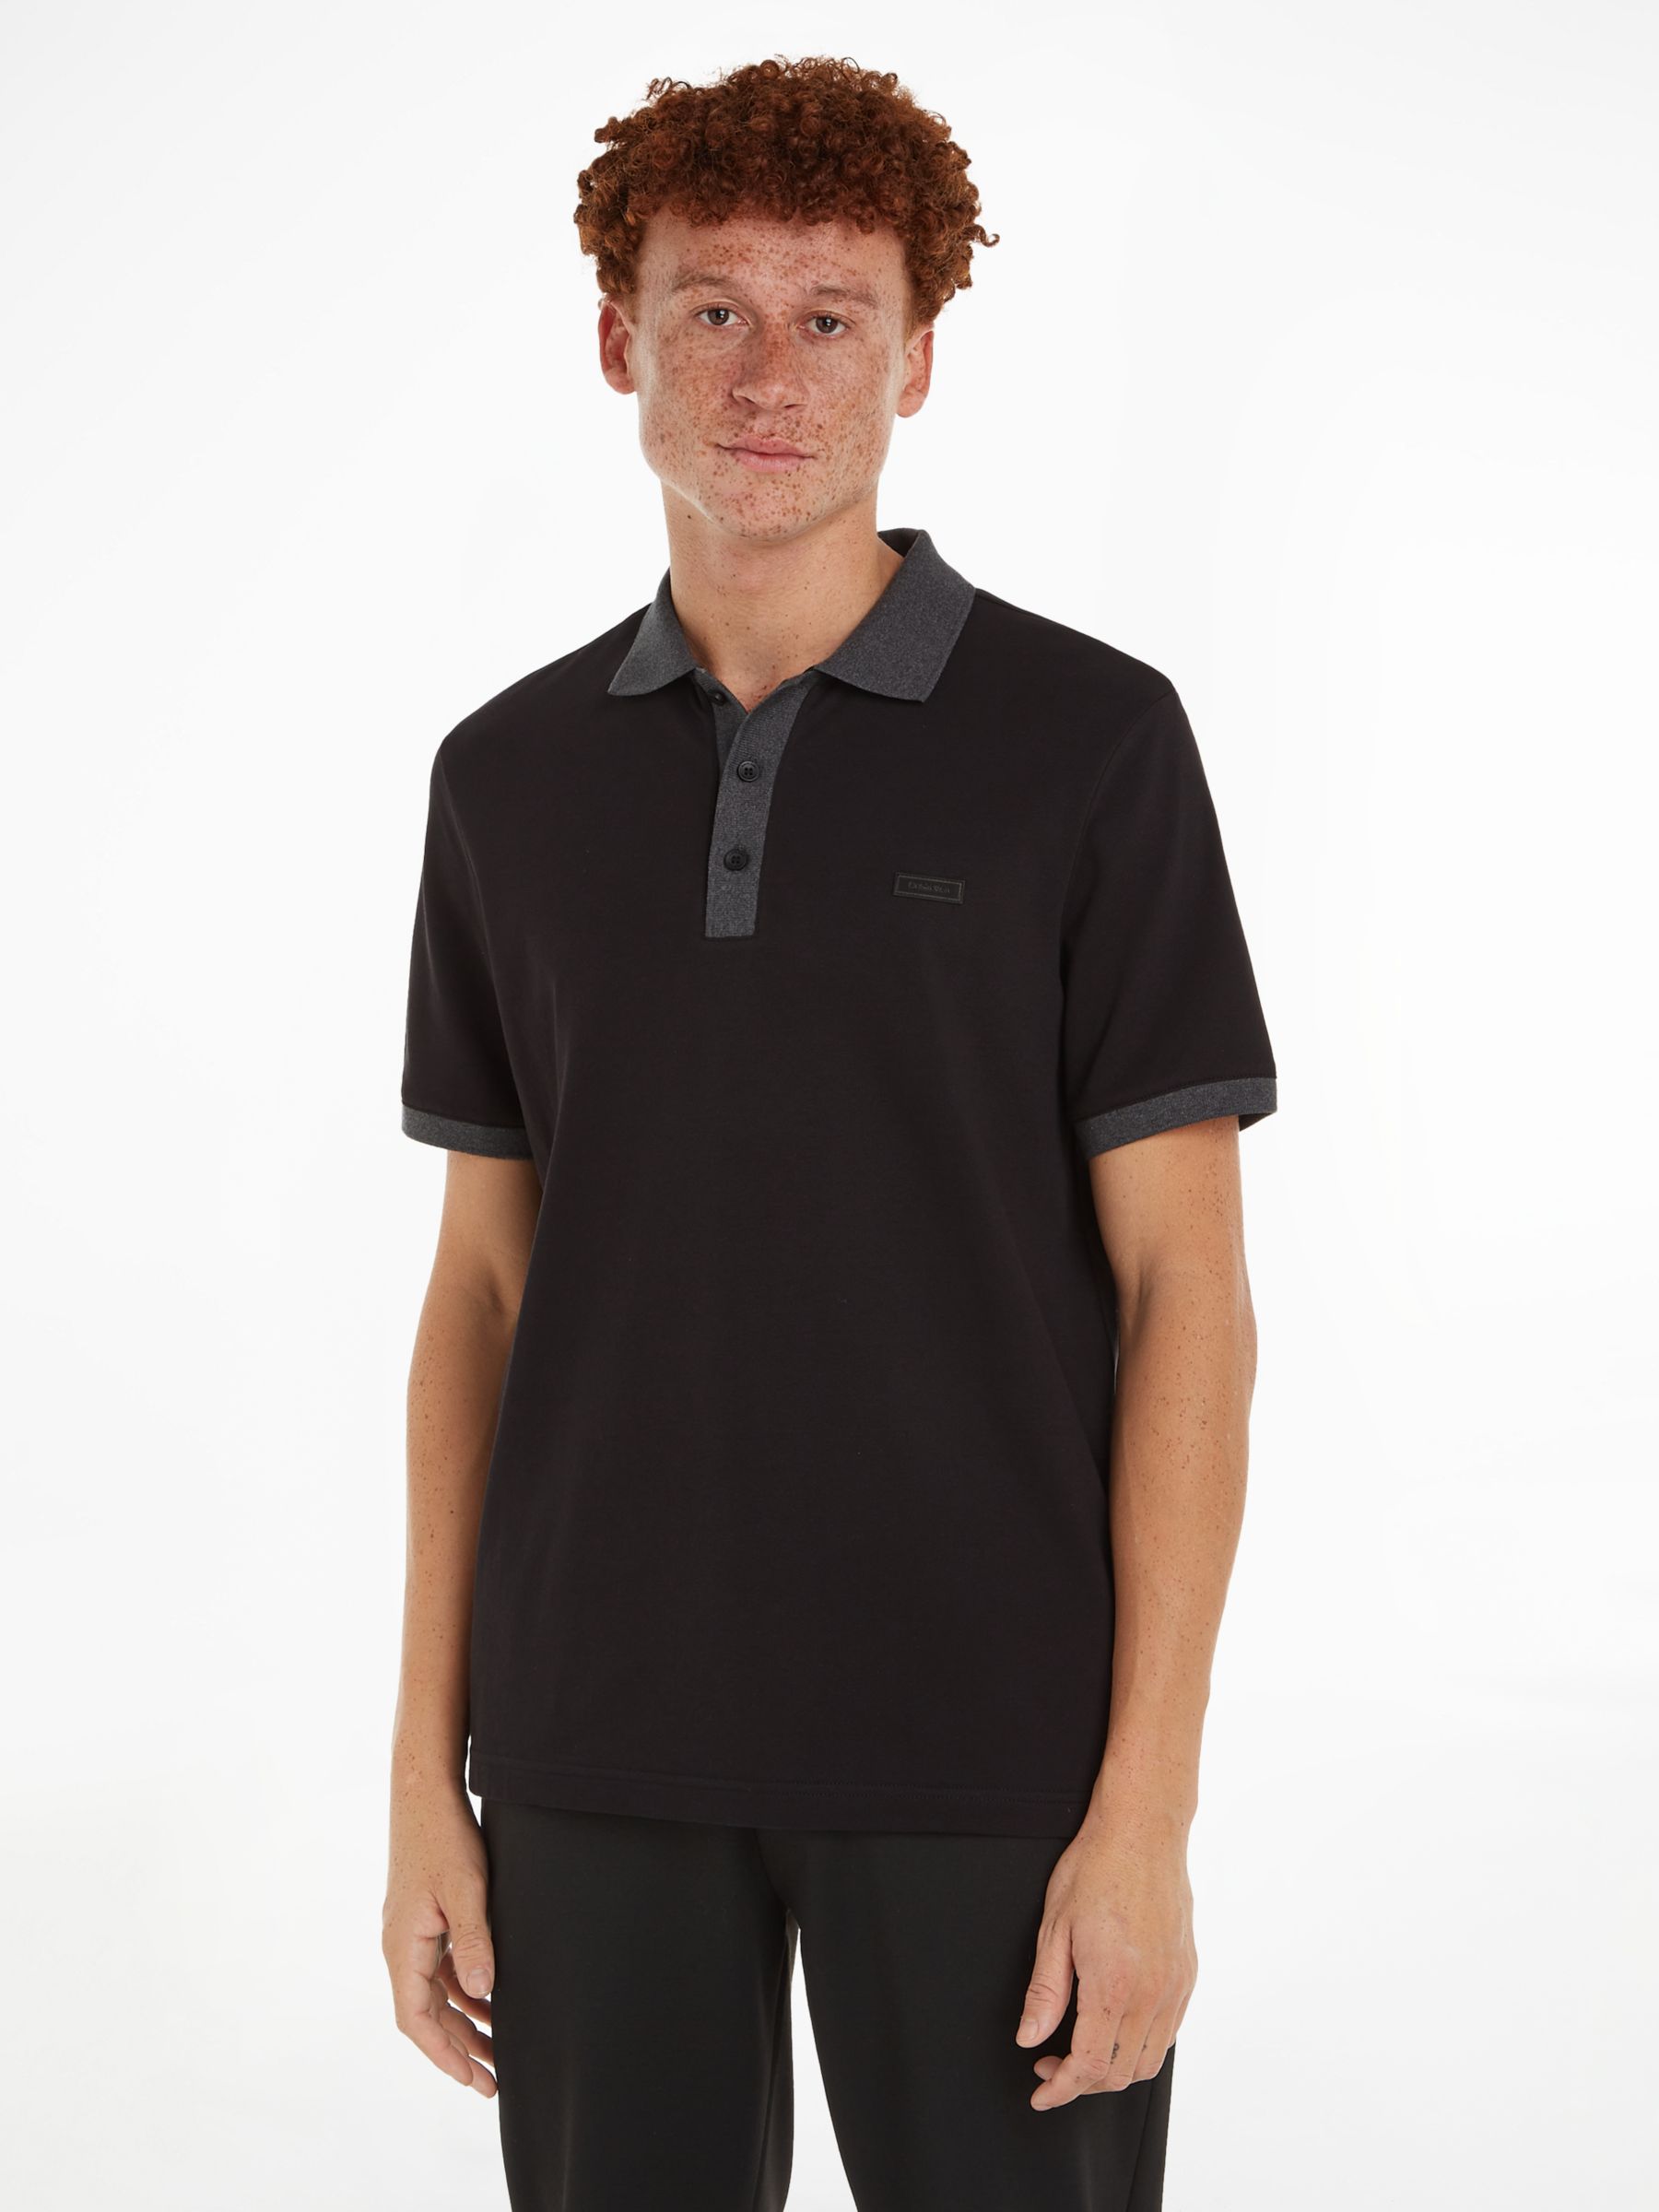 Calvin Klein Heather Placket Short Sleeve Polo Shirt, Black, S